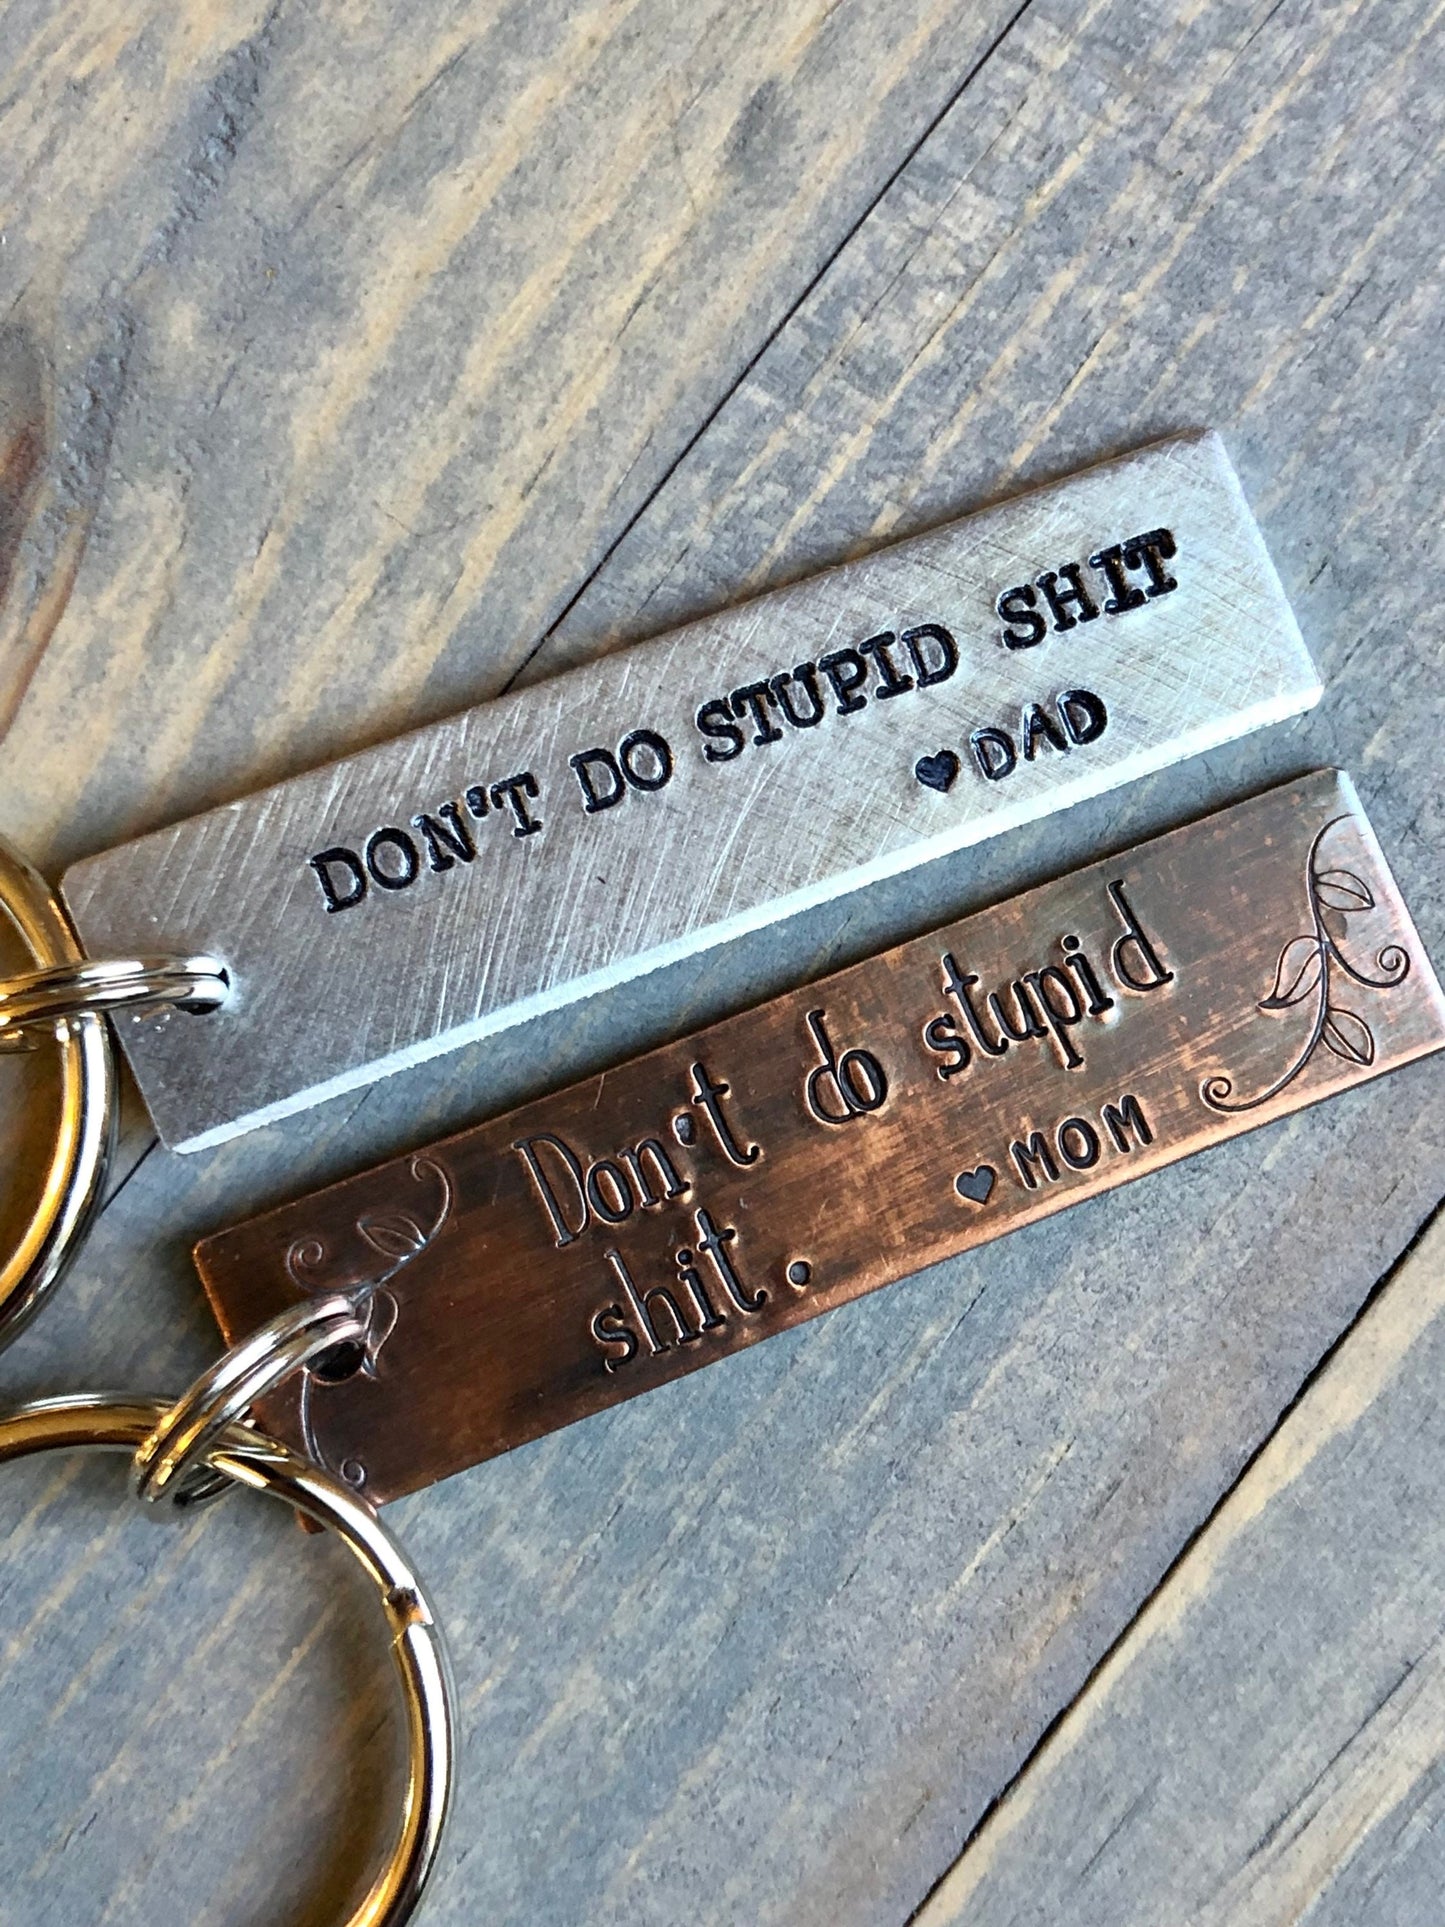 Dont do stupid shit custom keychain love - Key Chains & Lanyards